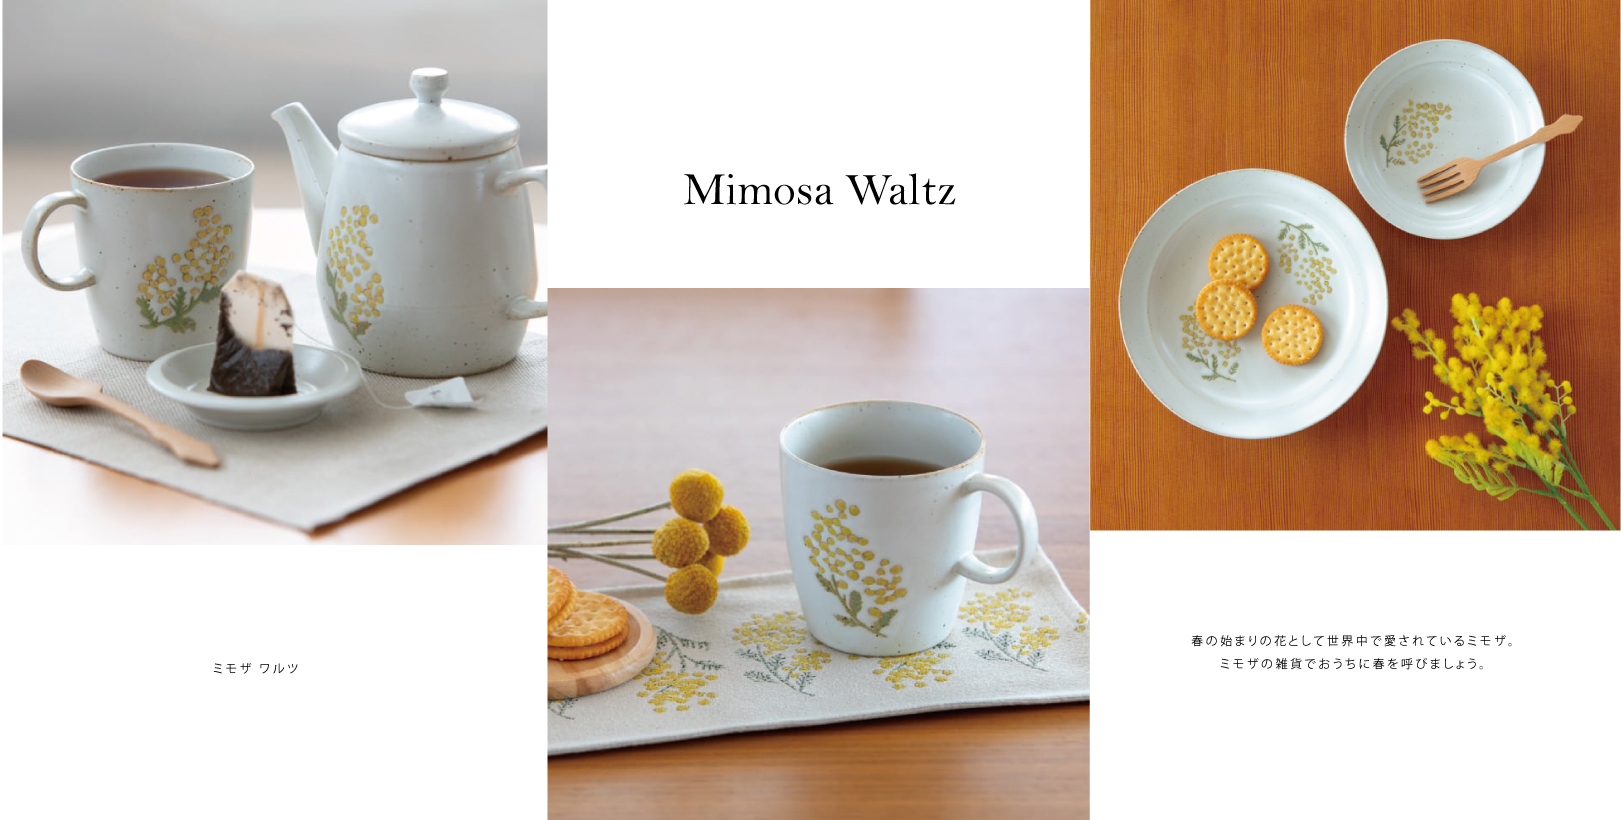 Mimosa-Waltz-shopline01